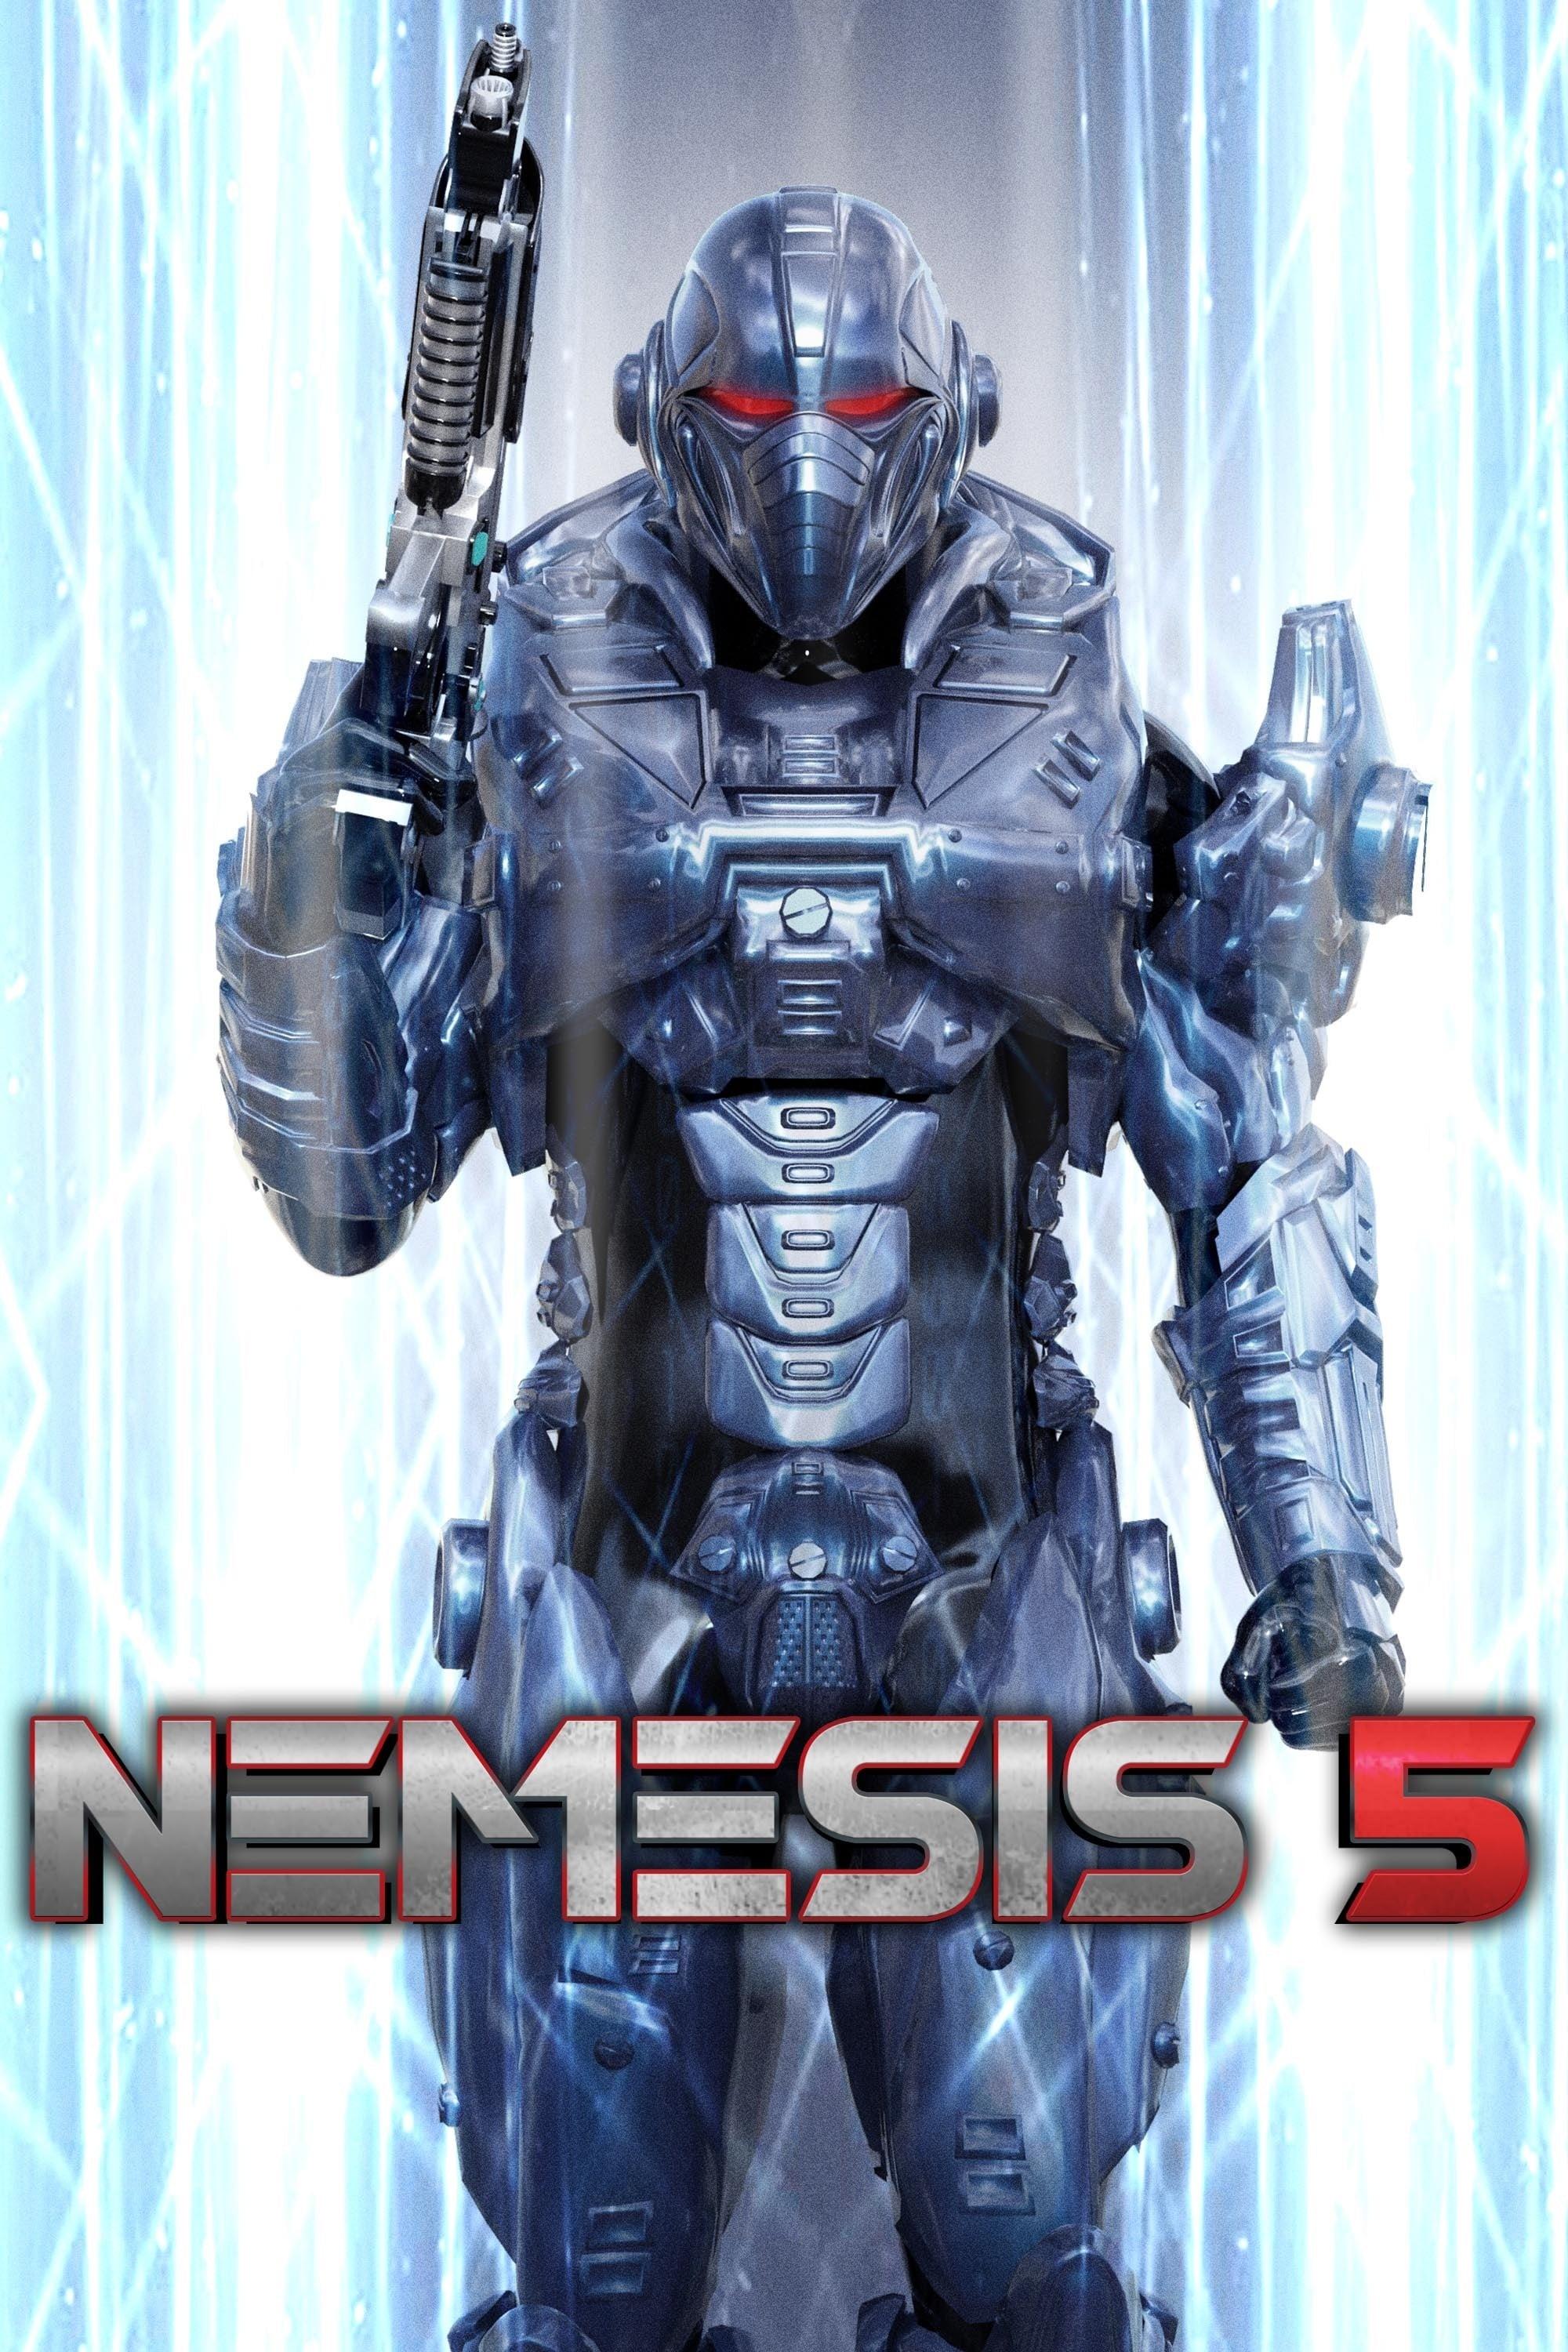 Nemesis 5: The New Model poster